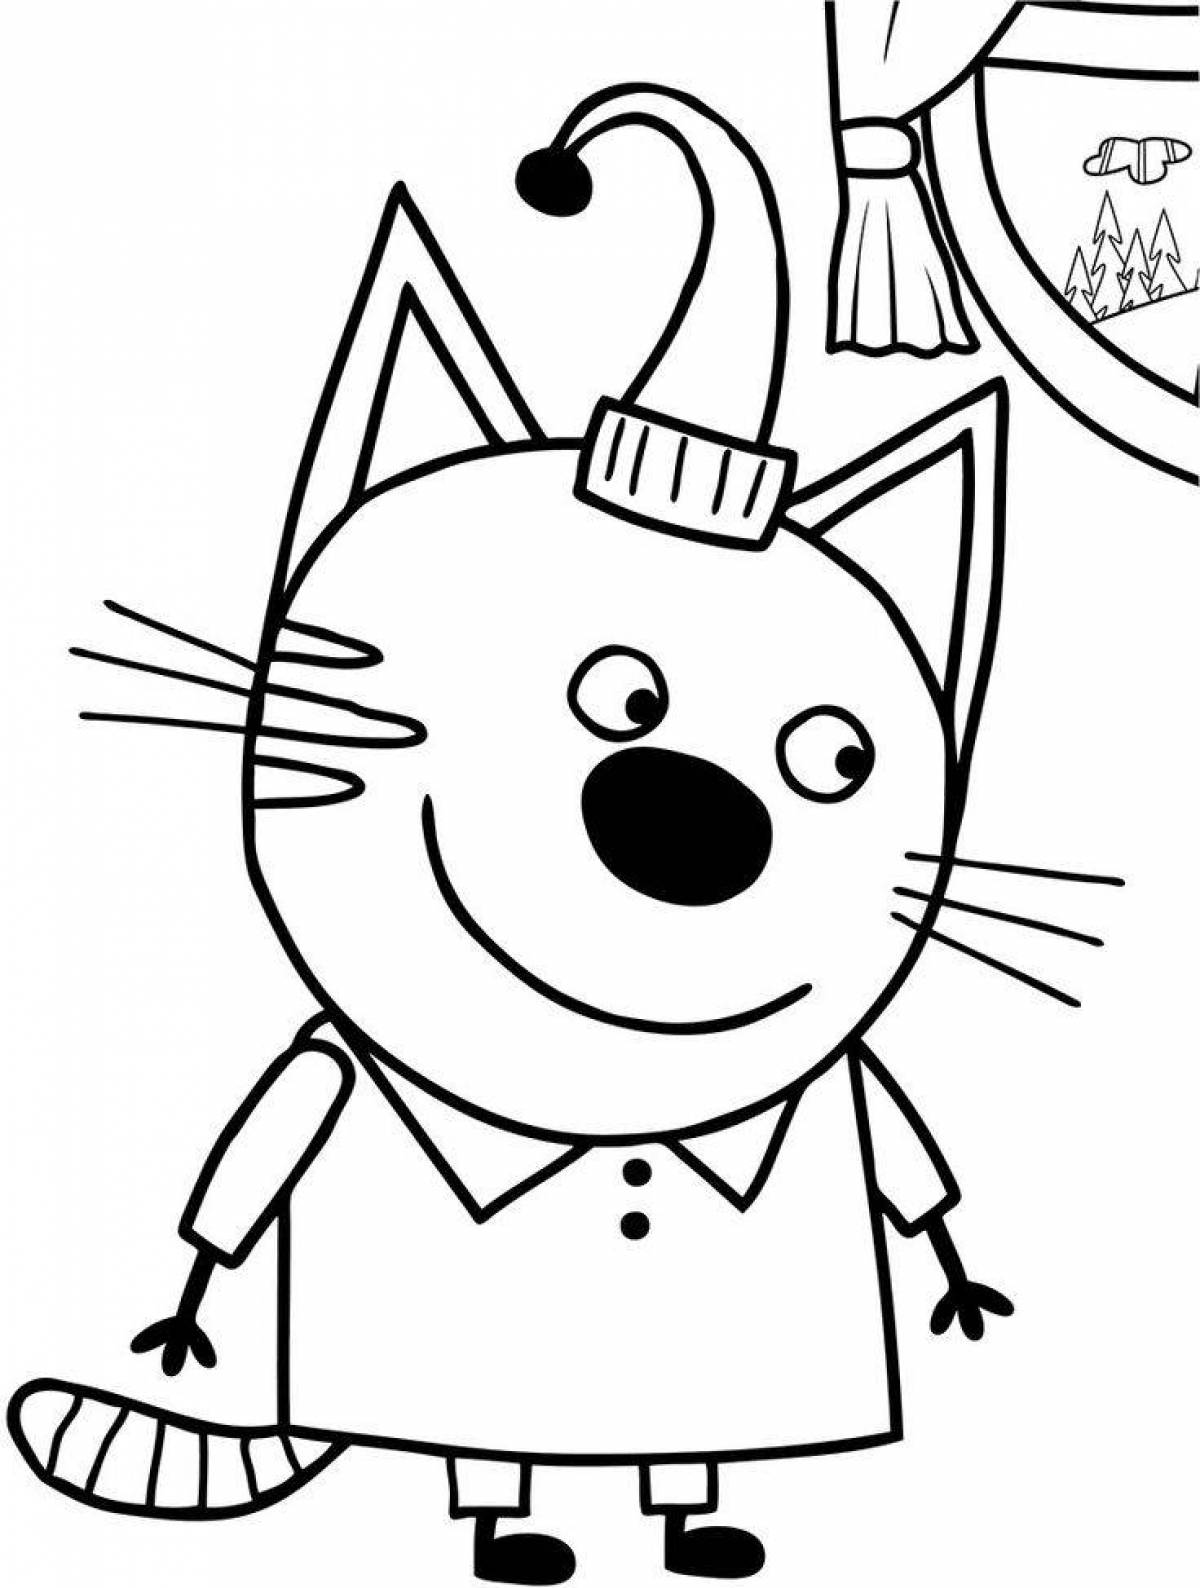 Three cats coloring book for preschoolers